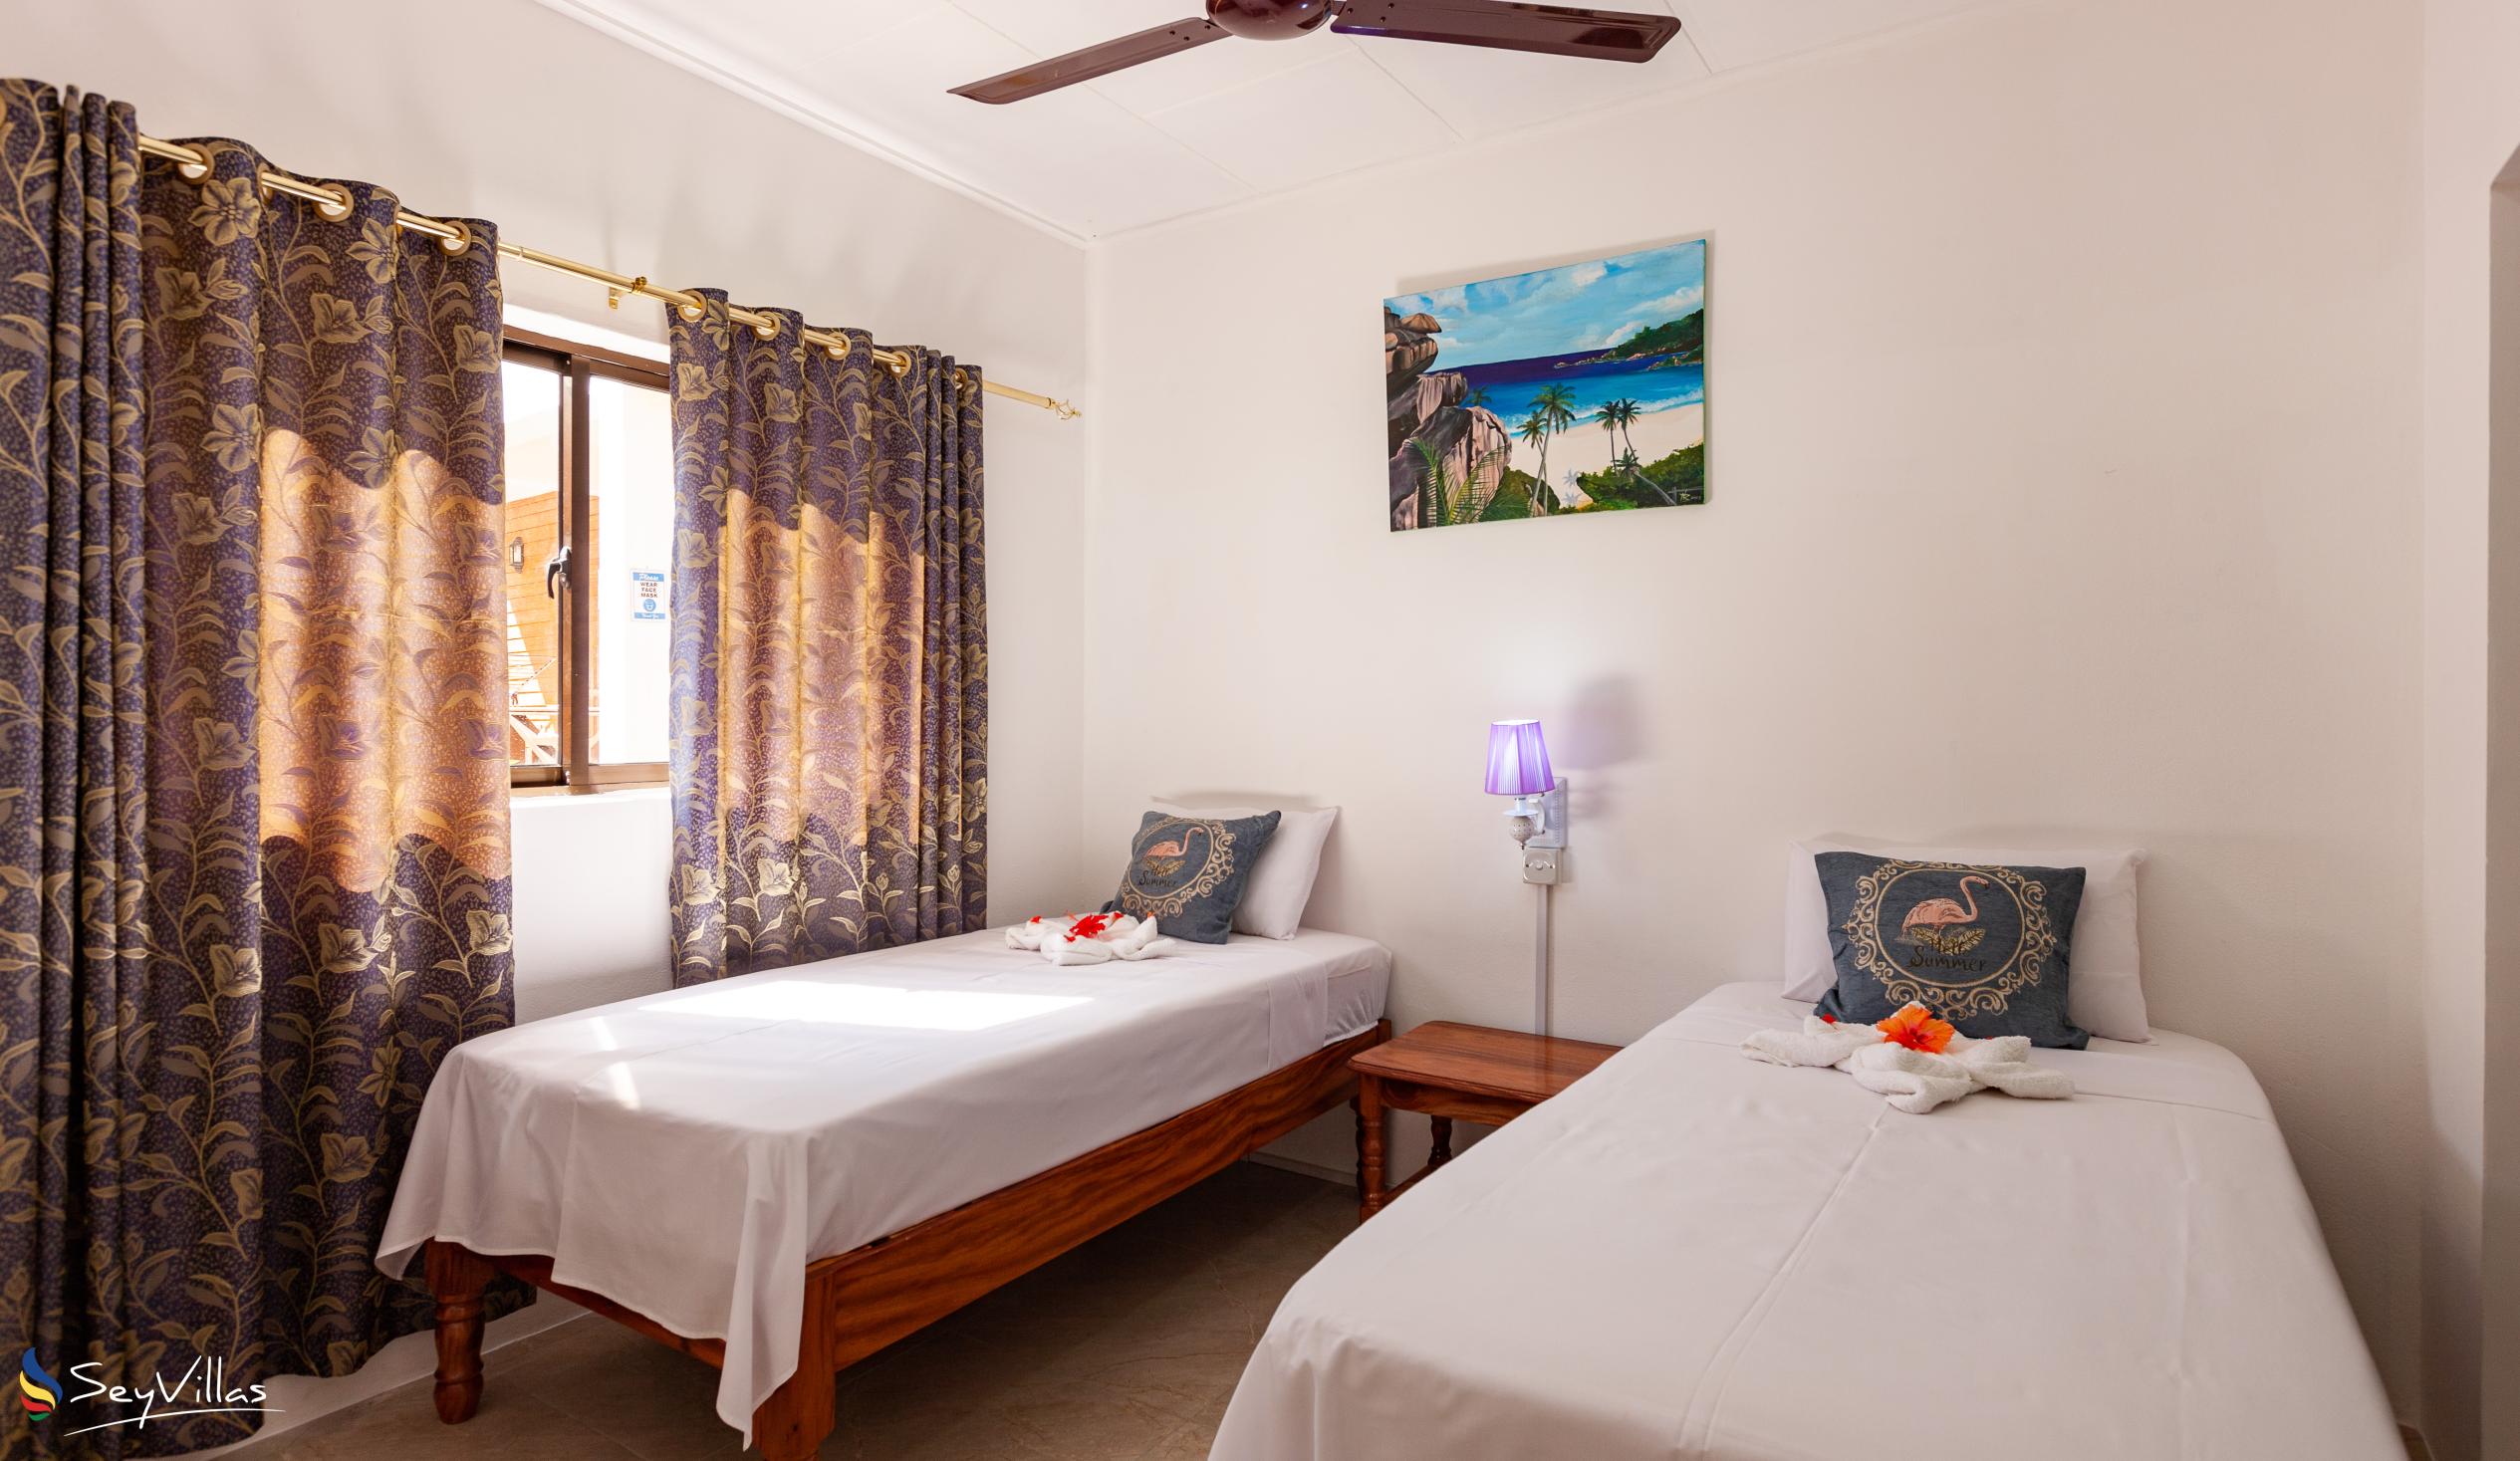 Foto 55: Anse Grosse Roche Beach Villa - Familienappartement mit 2 Schlafzimmern - La Digue (Seychellen)